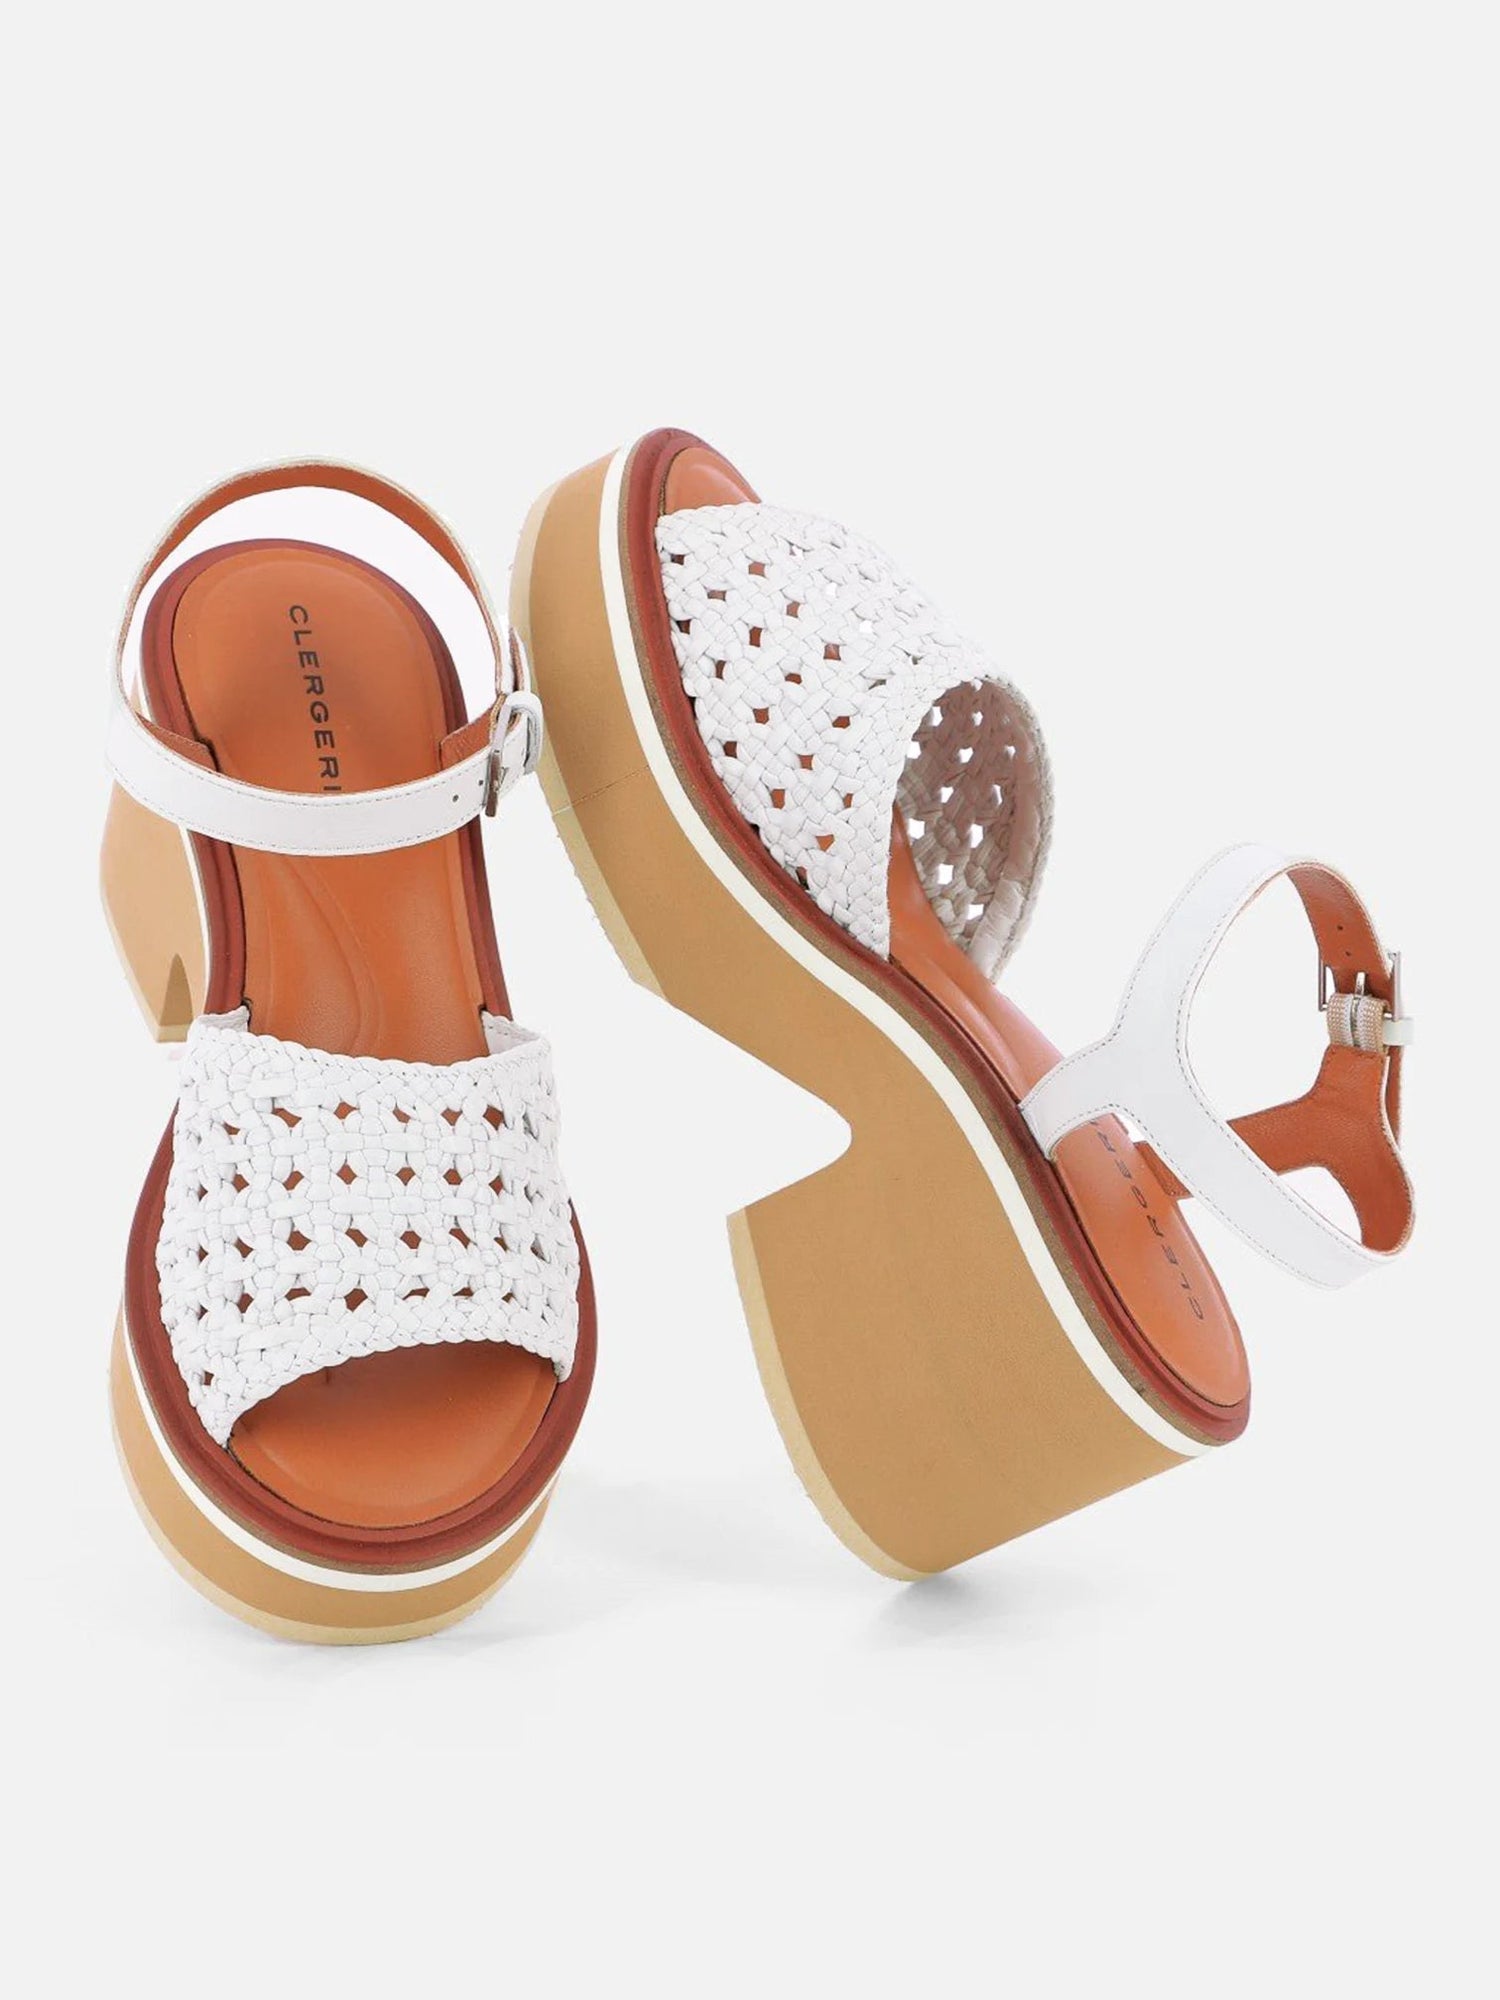 SANDALS - CELITA sandals, nappa white || OUTLET - CELITAWHINAPM340 - Clergerie Paris - USA